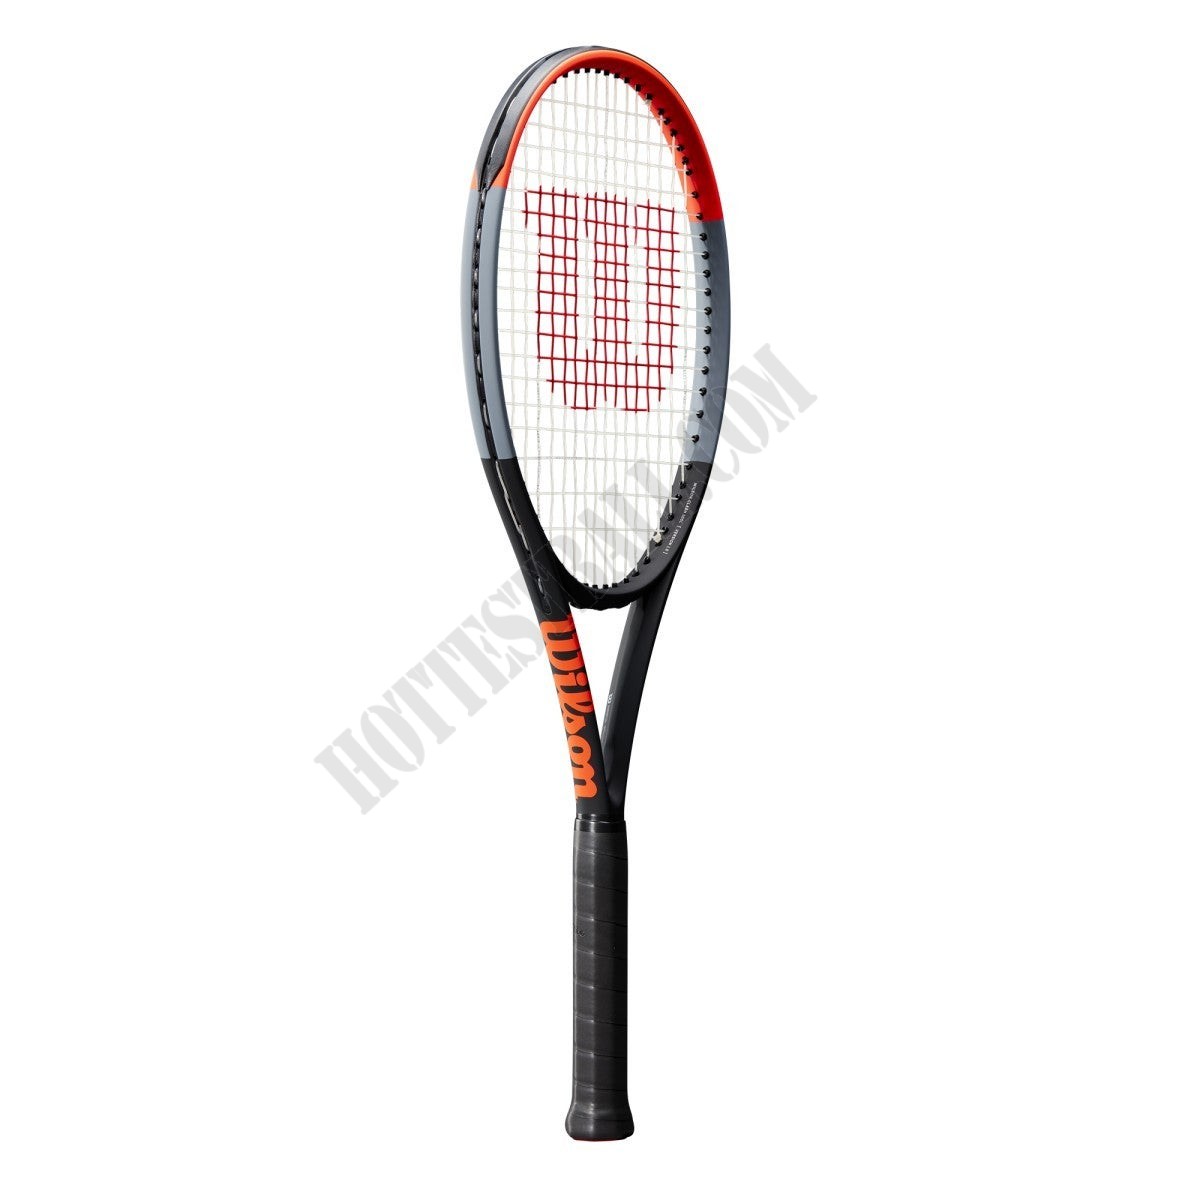 Clash 100L Tennis Racket - Wilson Discount Store - Clash 100L Tennis Racket - Wilson Discount Store